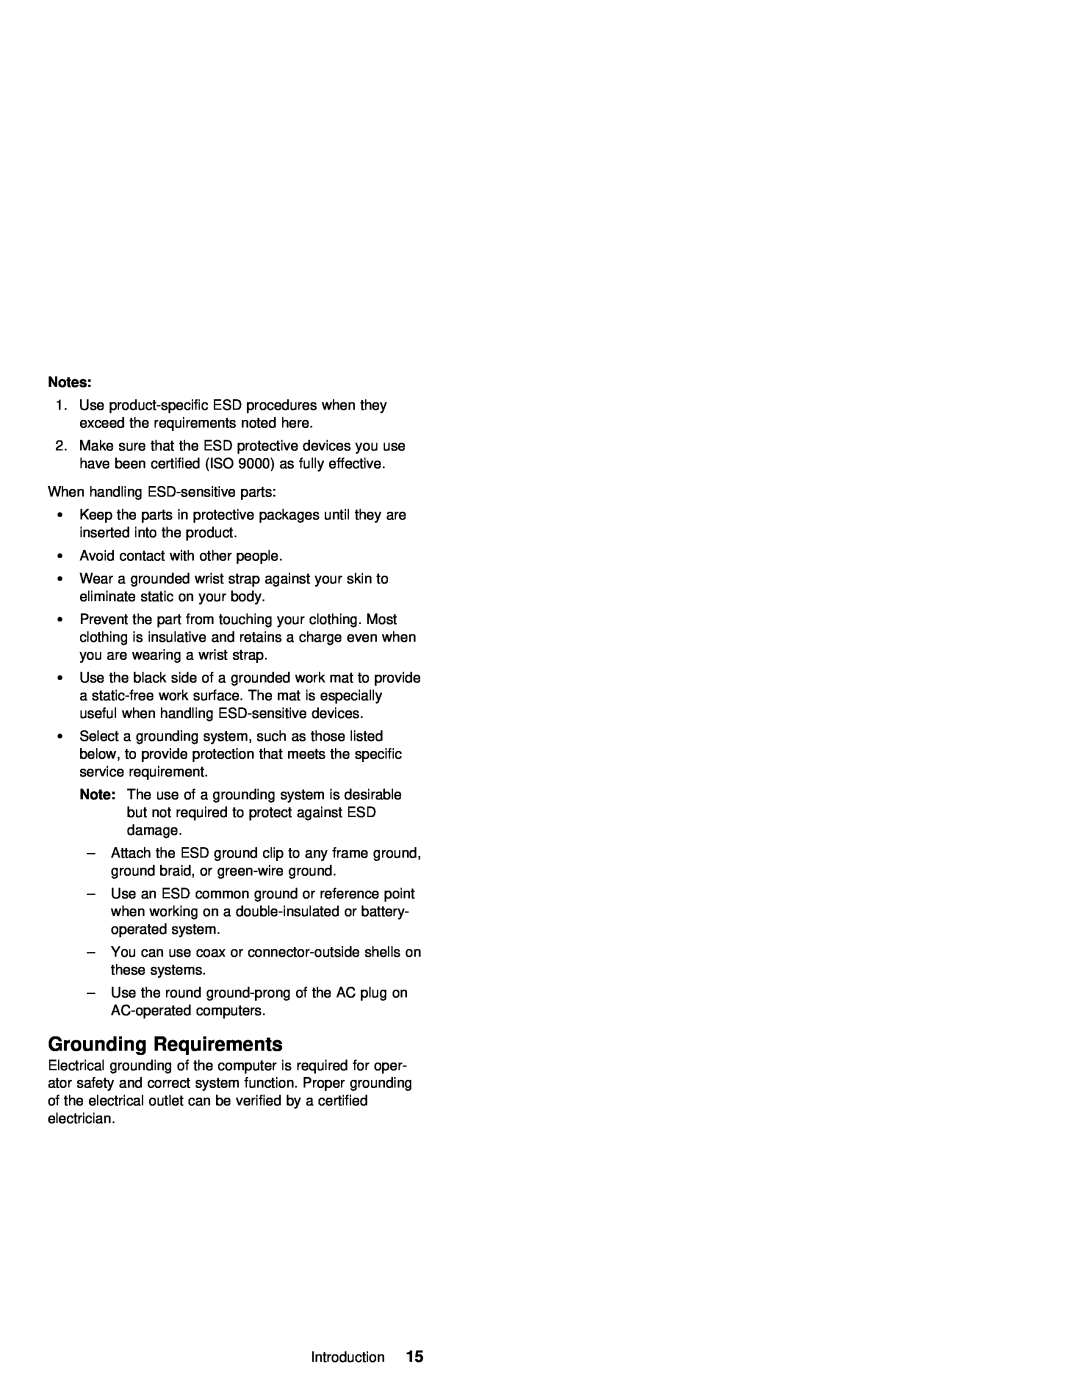 IBM 1400 (2611) manual Grounding Requirements 